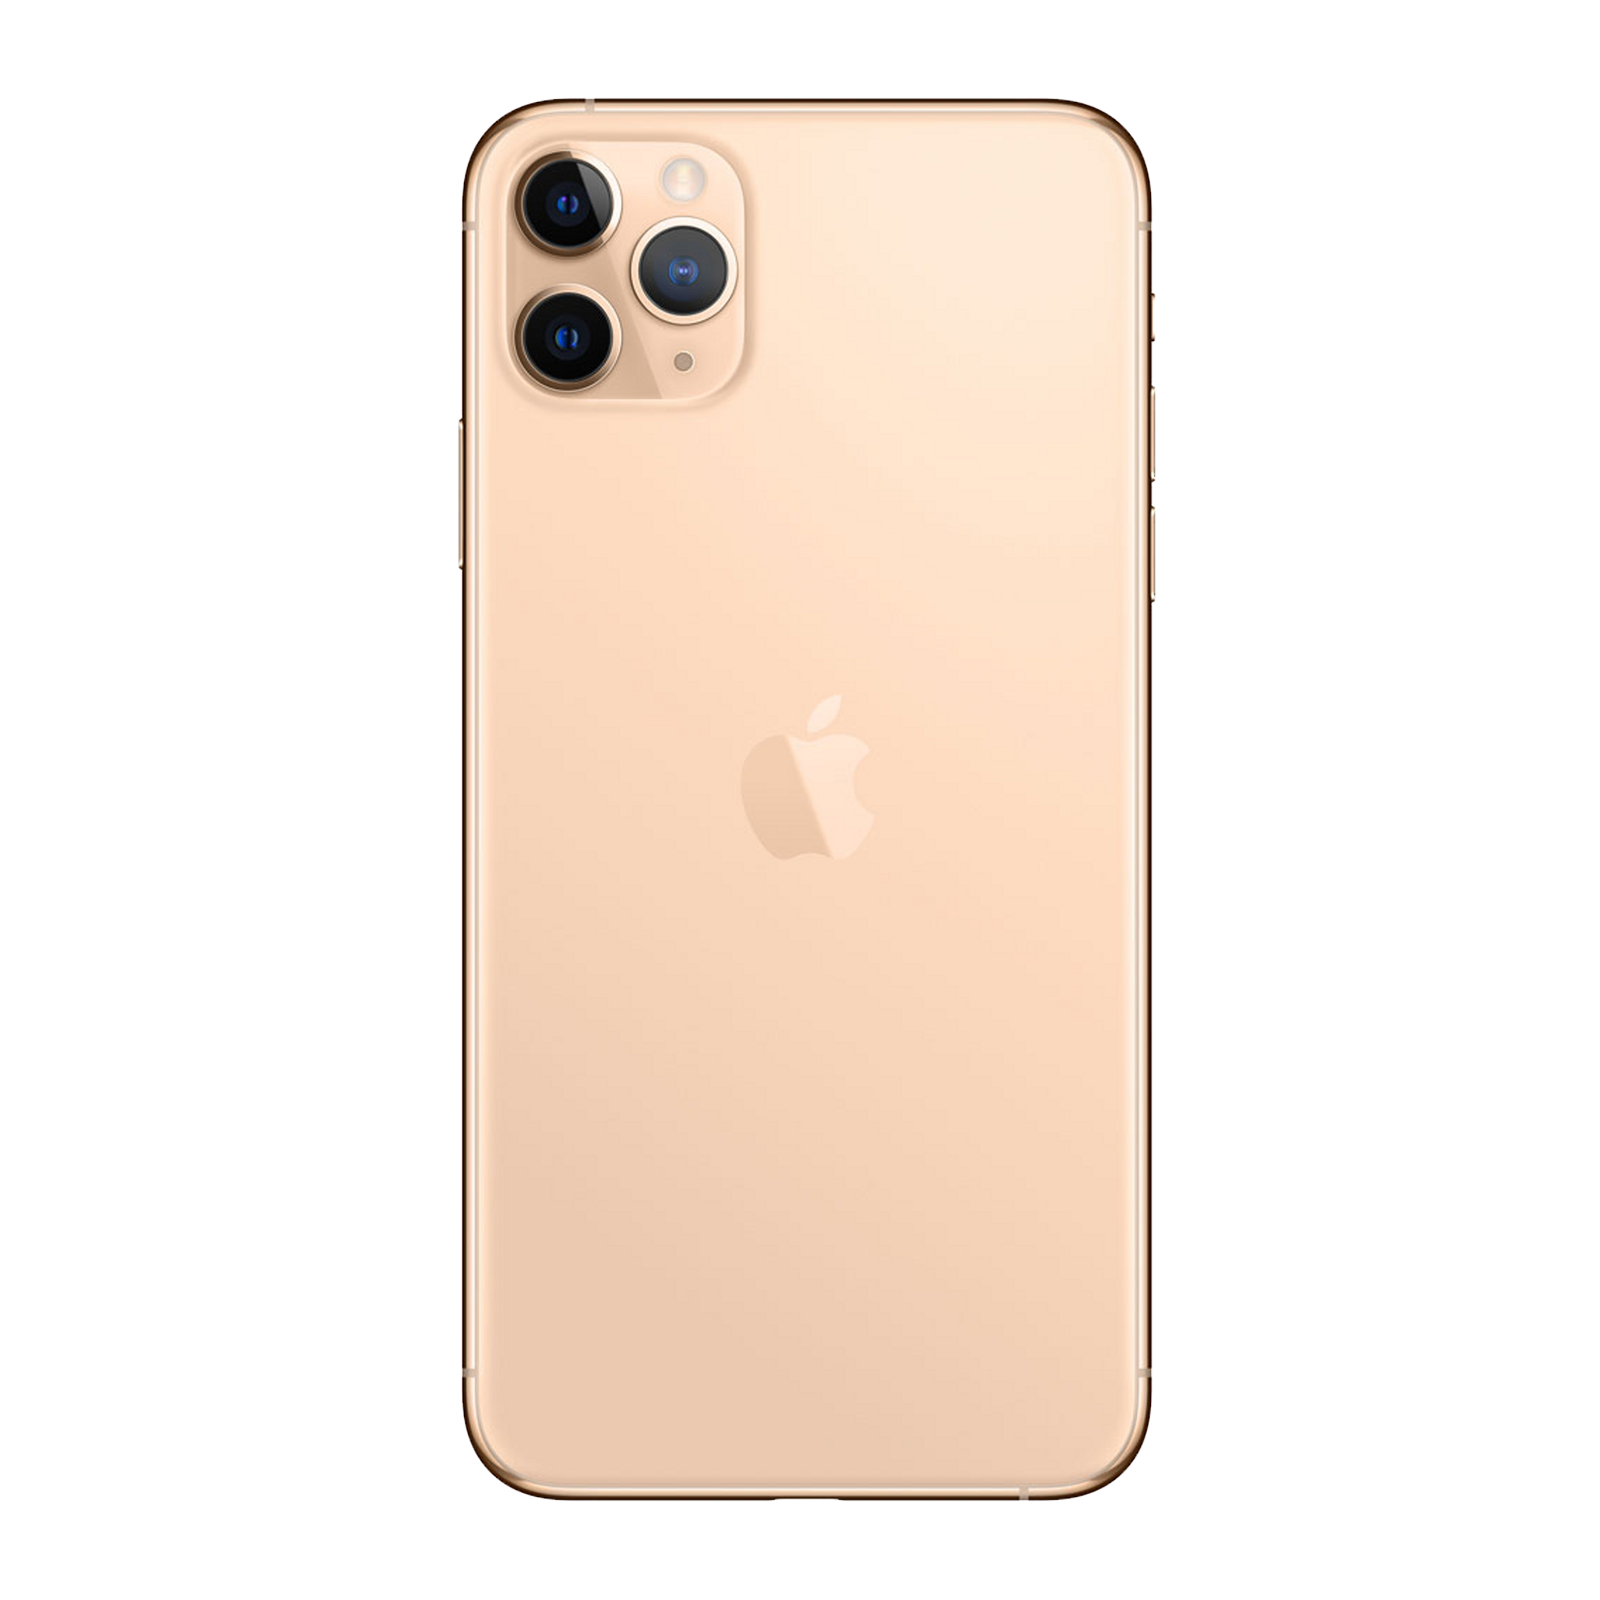 Apple iPhone 11 Pro 256GB Gold Pristine - AT&T